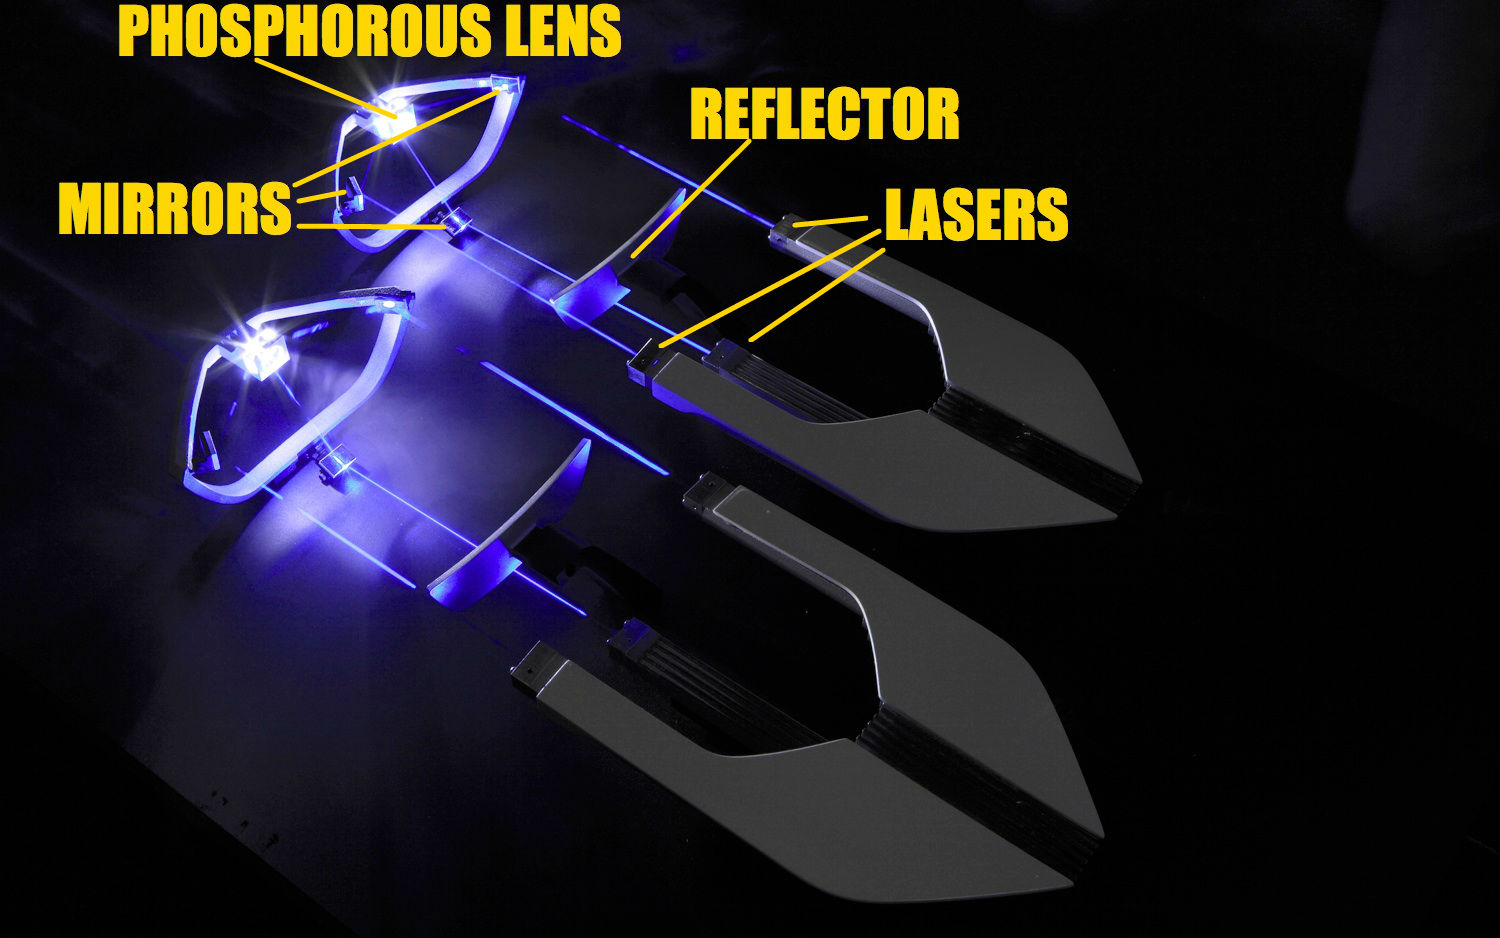 Battle of the Headlights: Halogen vs. Xenon vs. LED vs. Laser vs